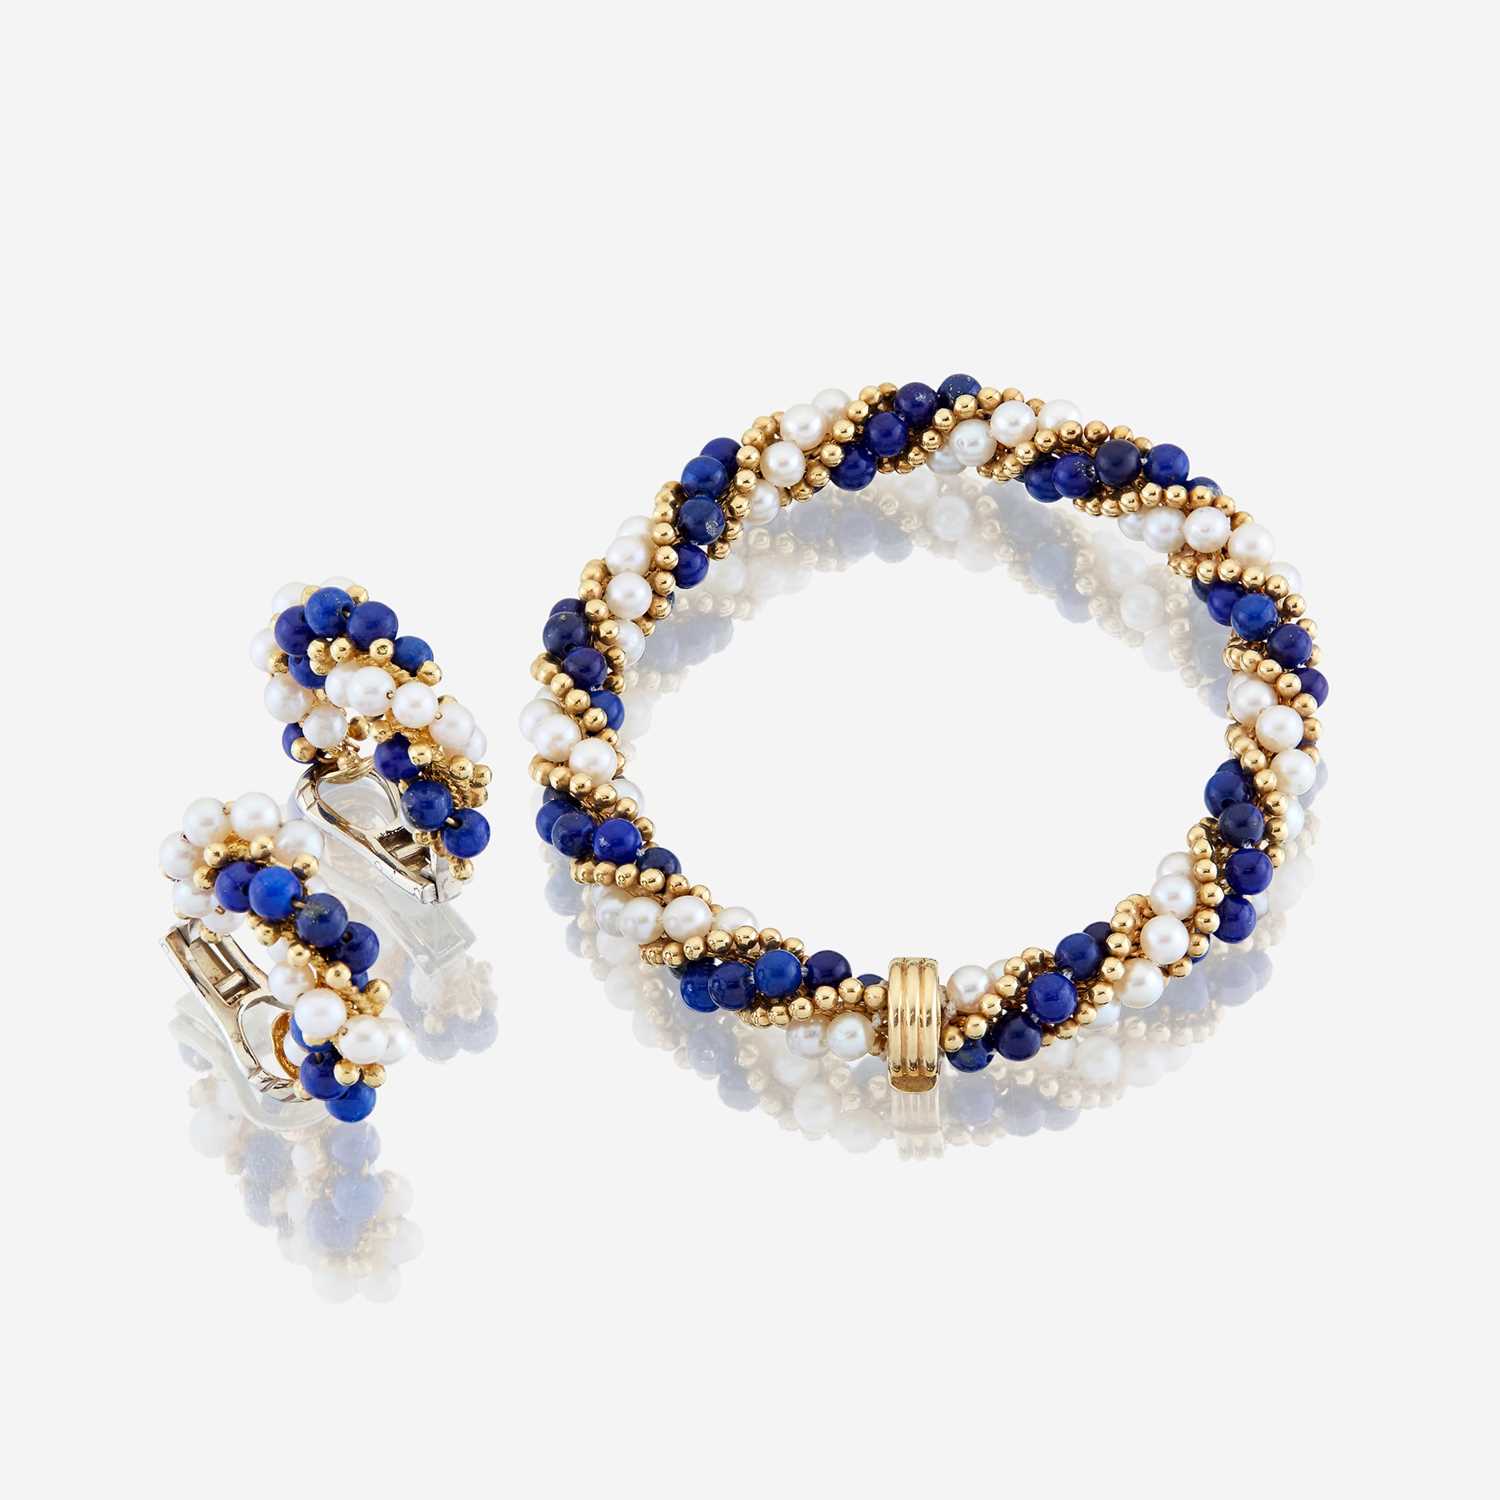 Lot 29 - A lapis lazuli, cultured pearl, and eighteen karat gold bracelet with similar ear clips